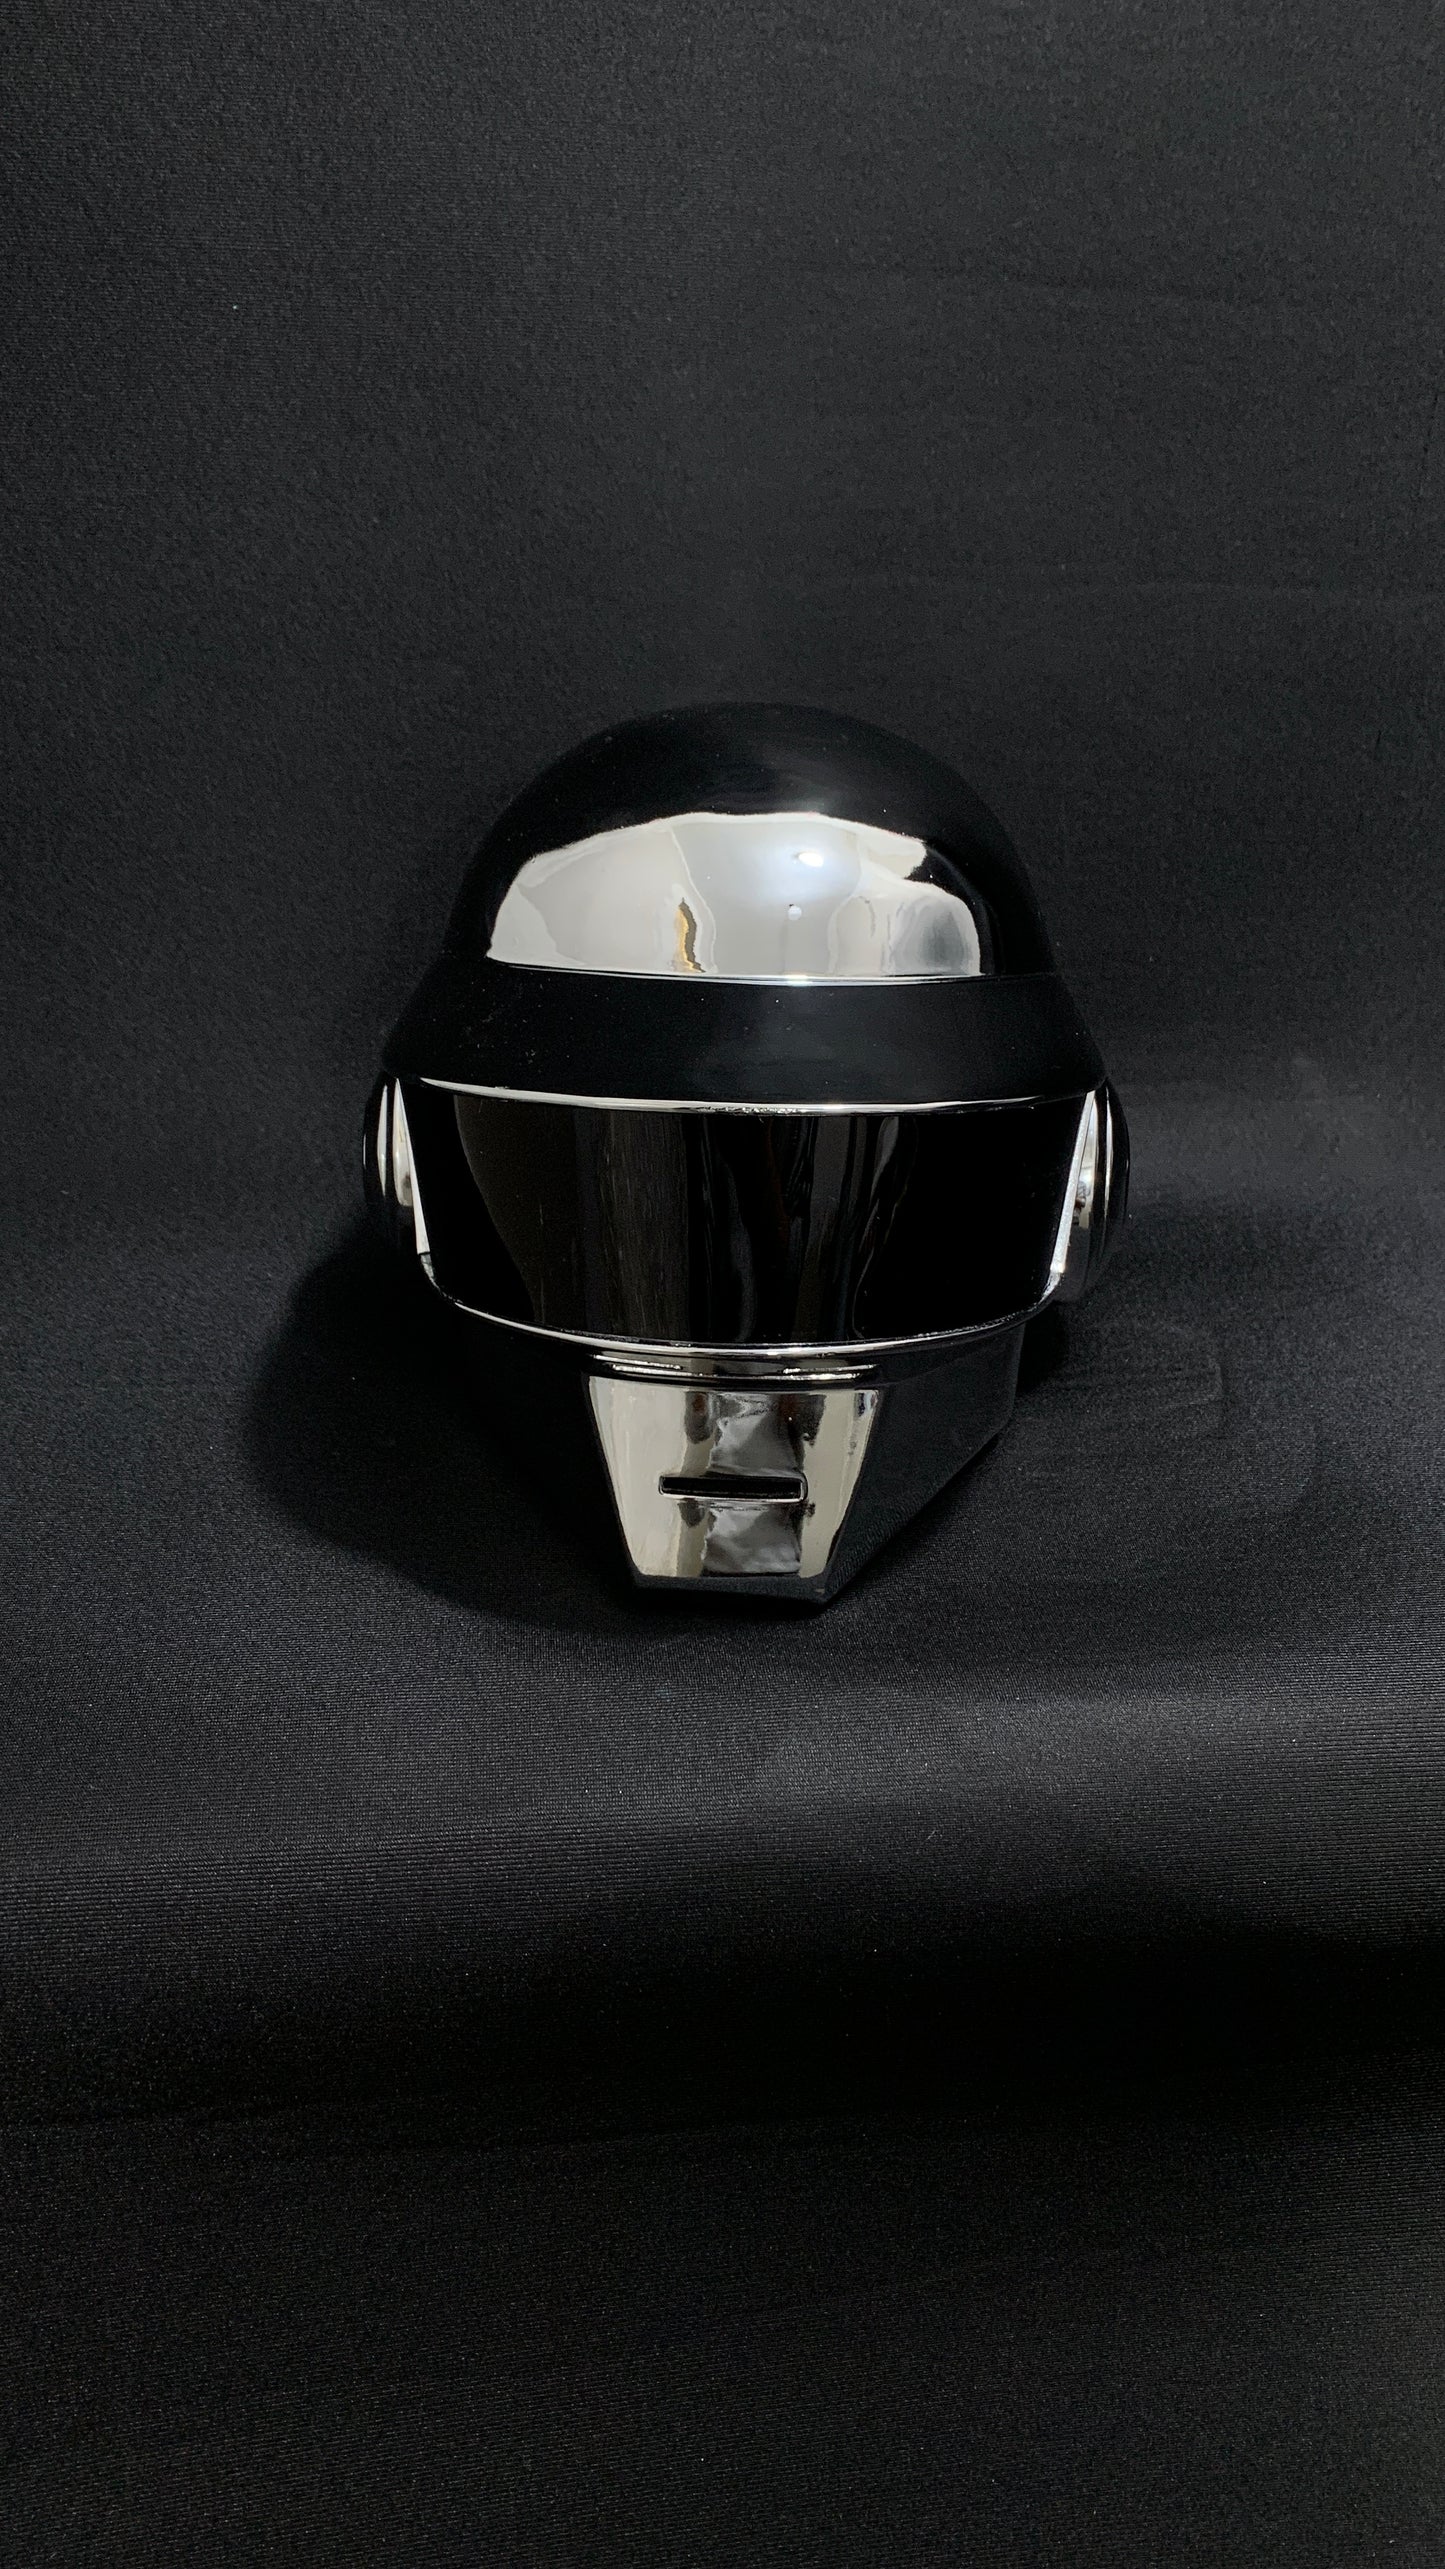 Daft Punk Chromed helmet (Thomas Bangalter)